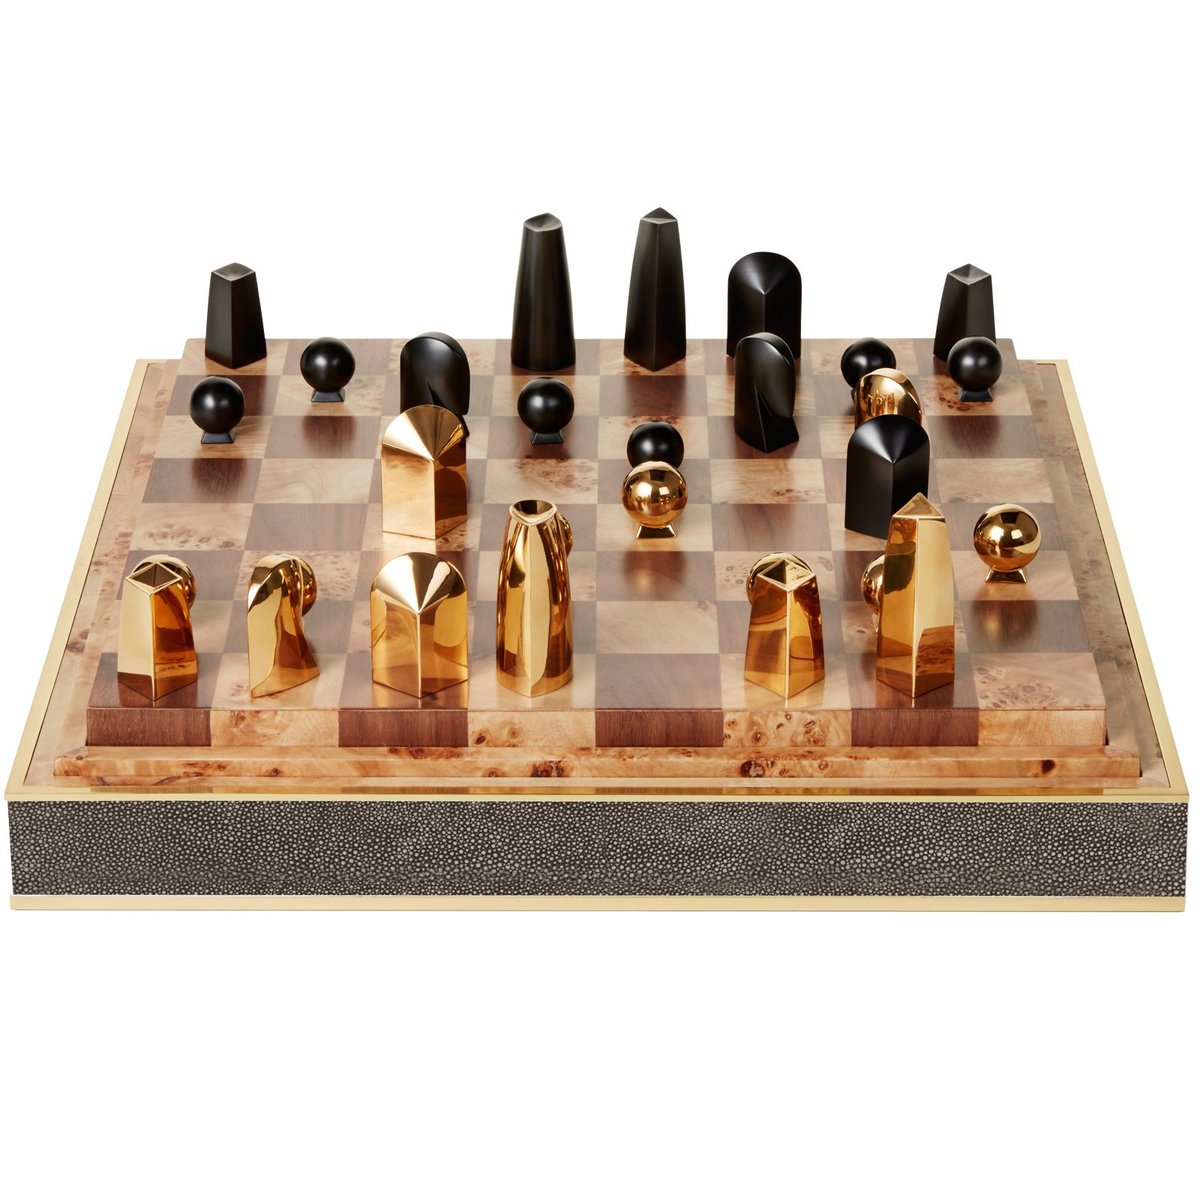 Chocolate Shagreen Chess Set